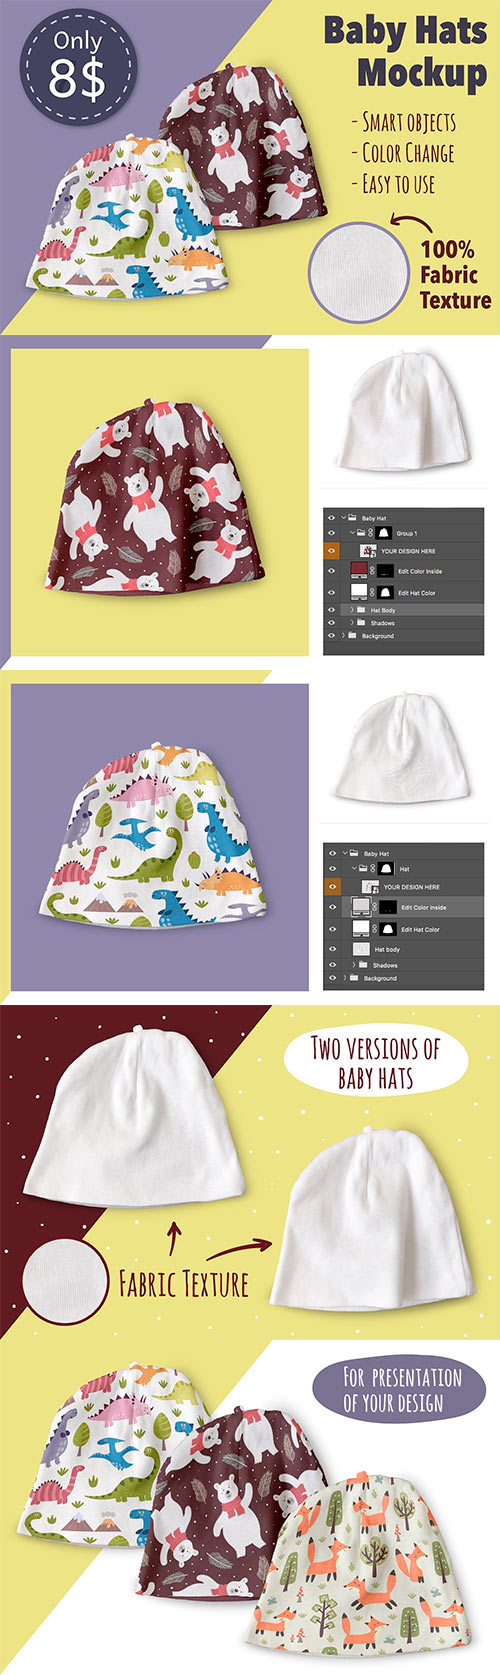 Baby Hats Mockup 3648218